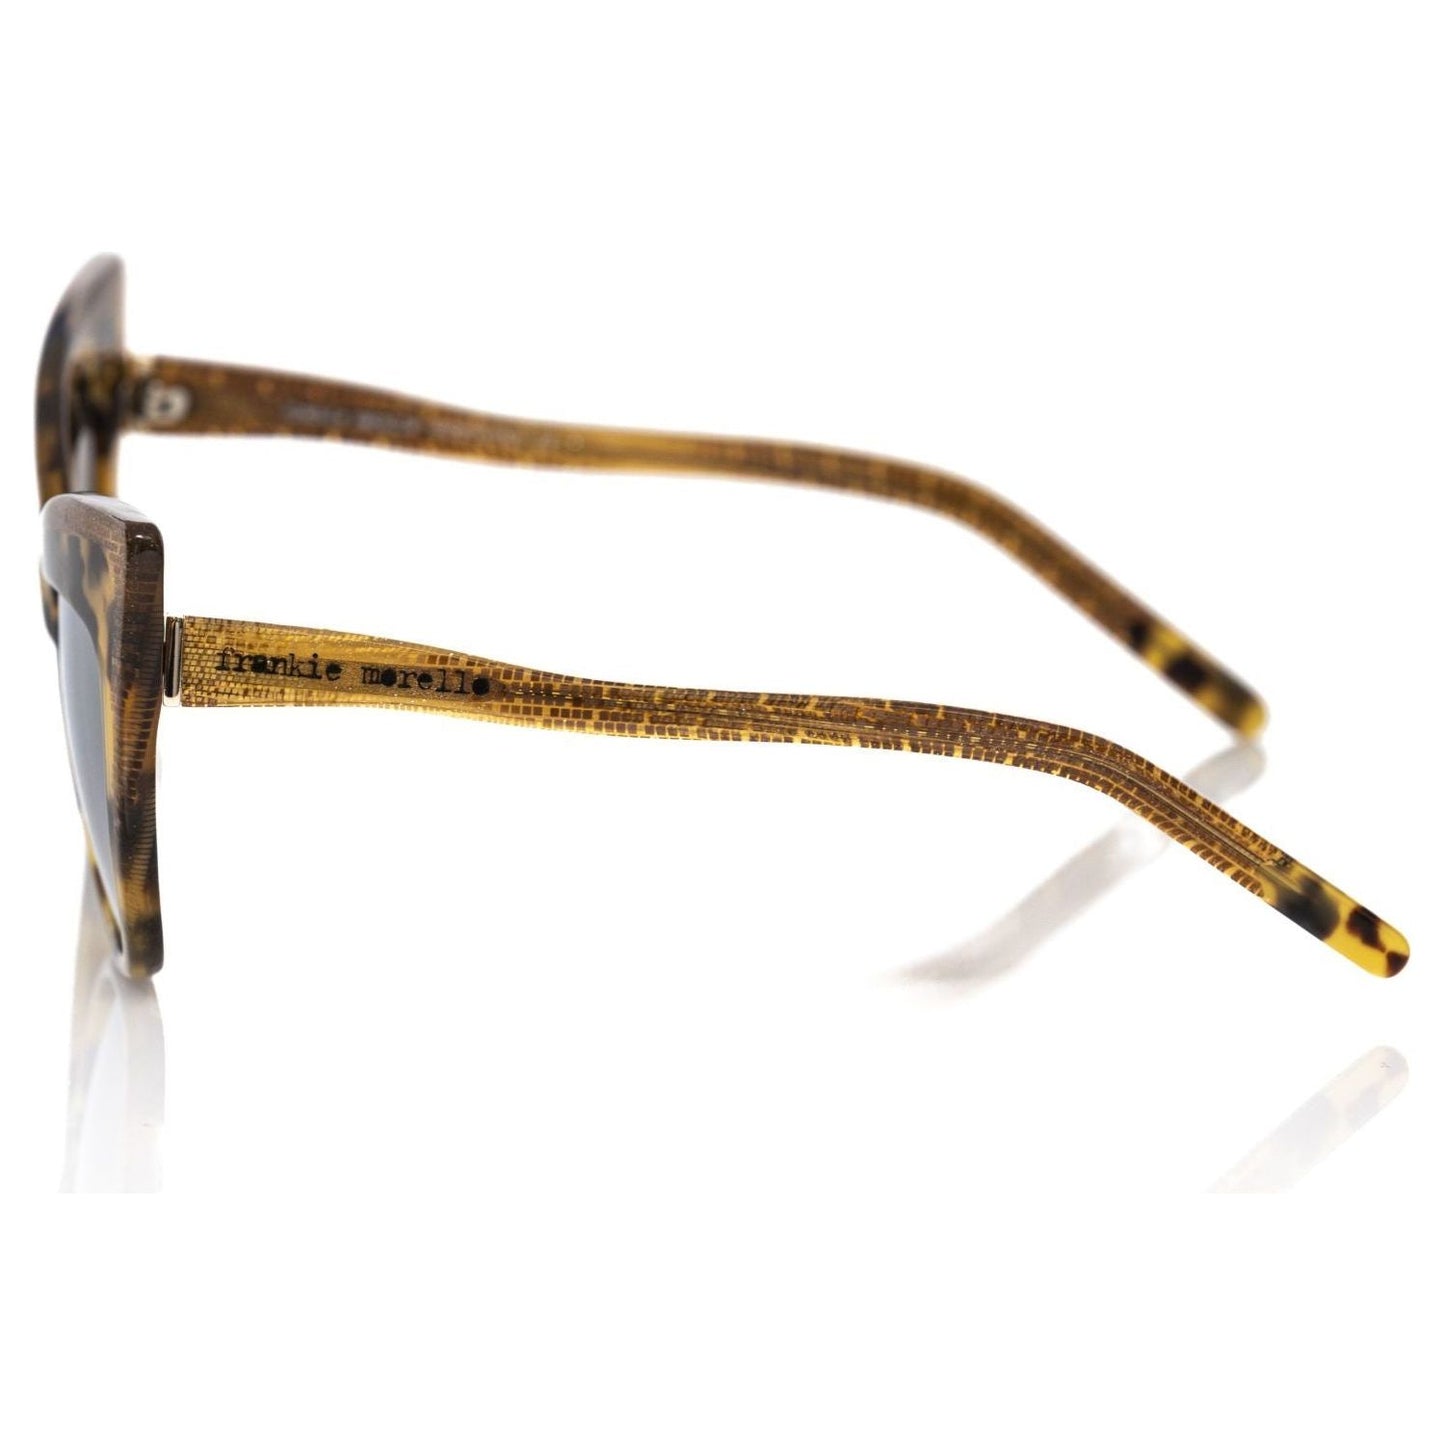 Frankie MorelloGlitter-Edged Cat Eye Sunglasses in YellowMcRichard Designer Brands£79.00